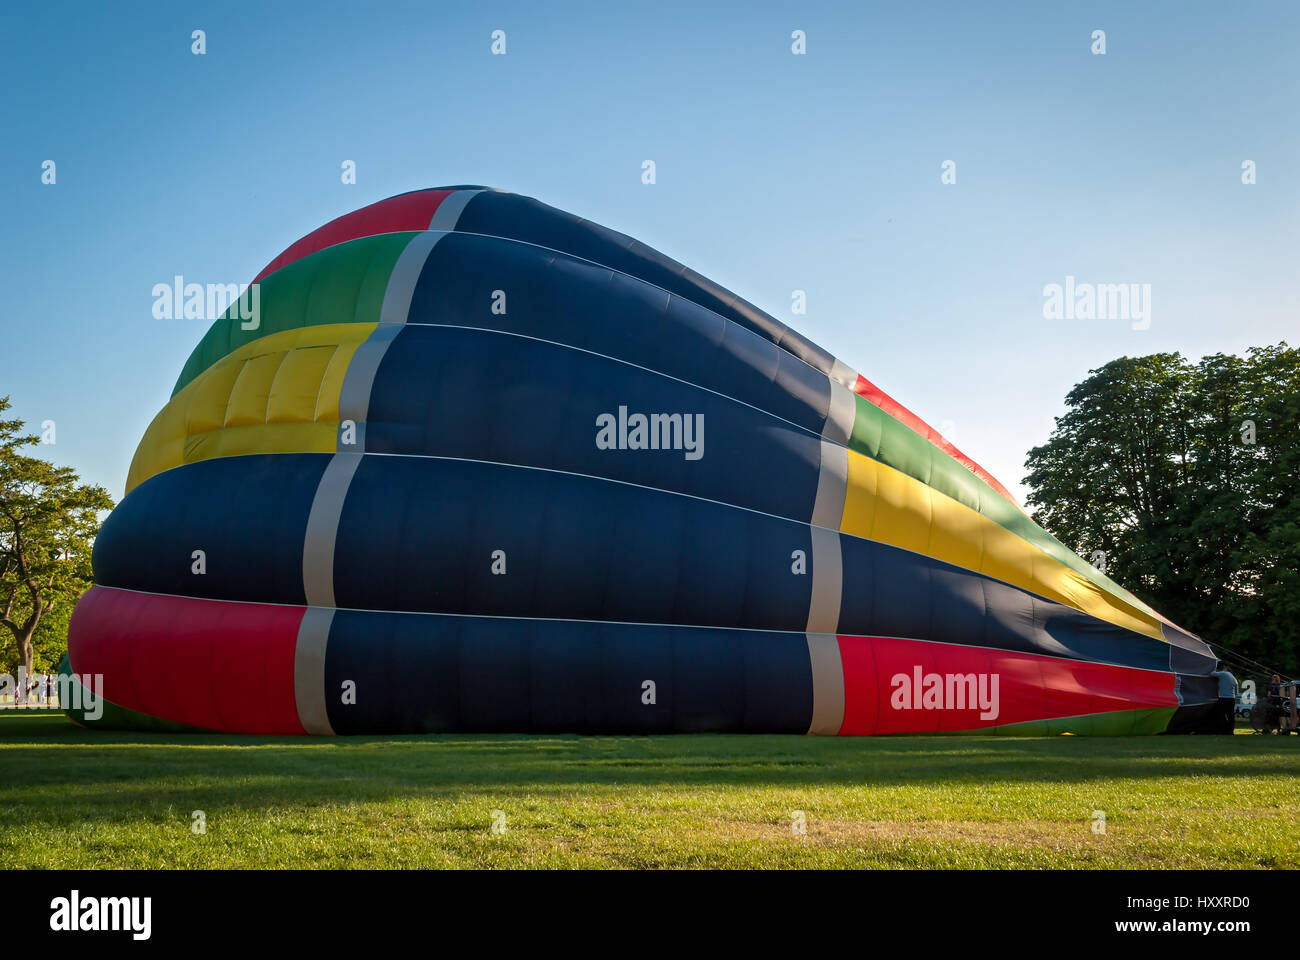 Inflating a hot-air balloon Stock Photo